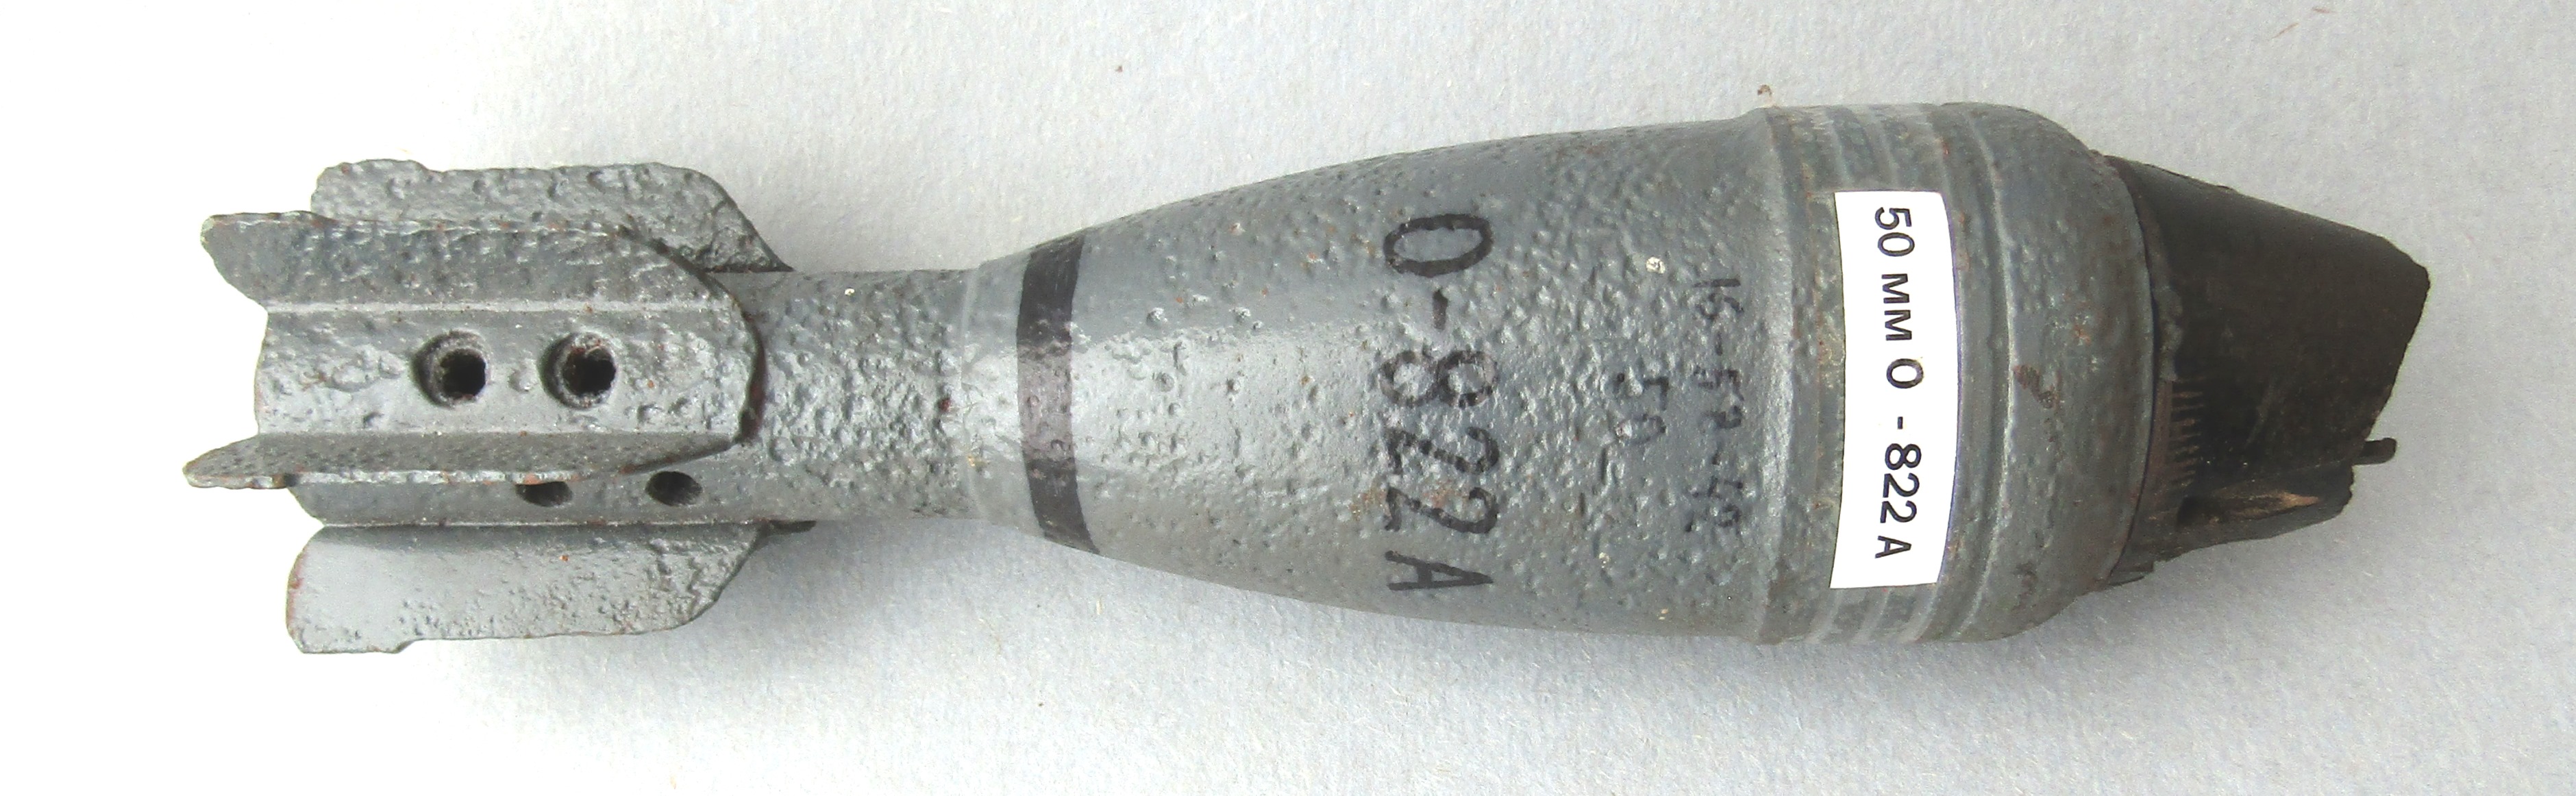 	 Міна 0-822А чавунна чотирьохпера до 50-мм ротного зразка 1938/40 рр. 